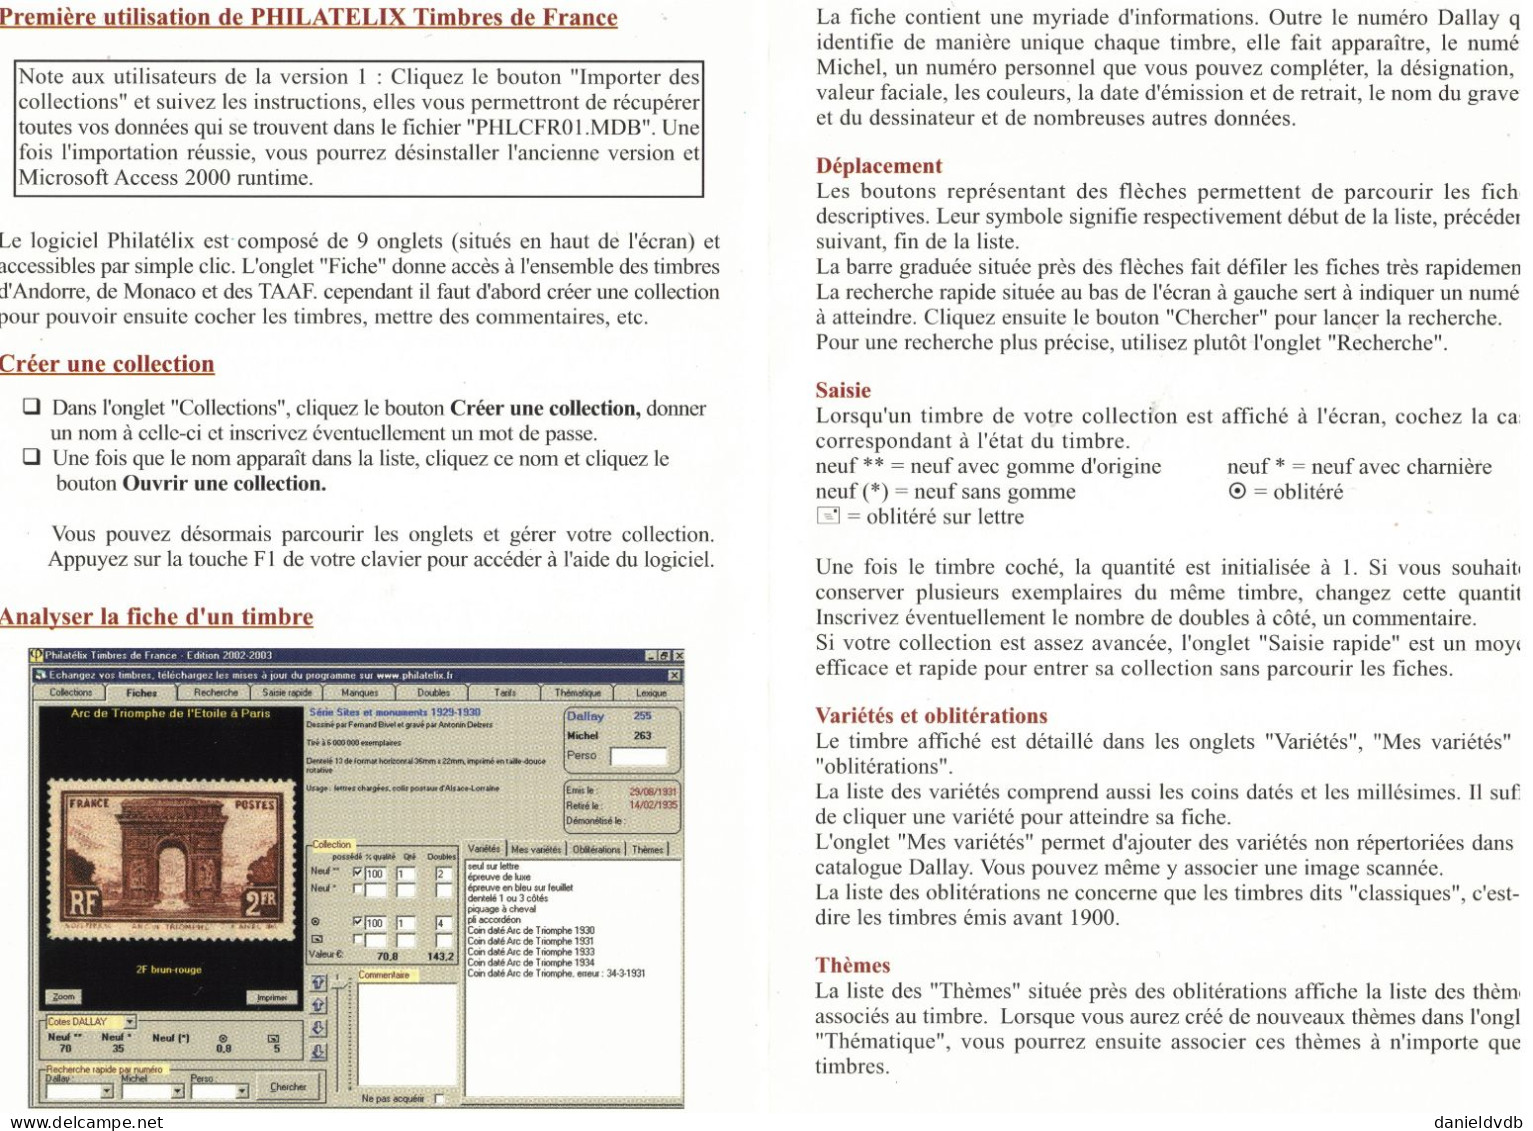 Timbres De FRANCE 1849 - 2001 Philatelix édition Dallay 2002-2003 1 CD-ROM - Français